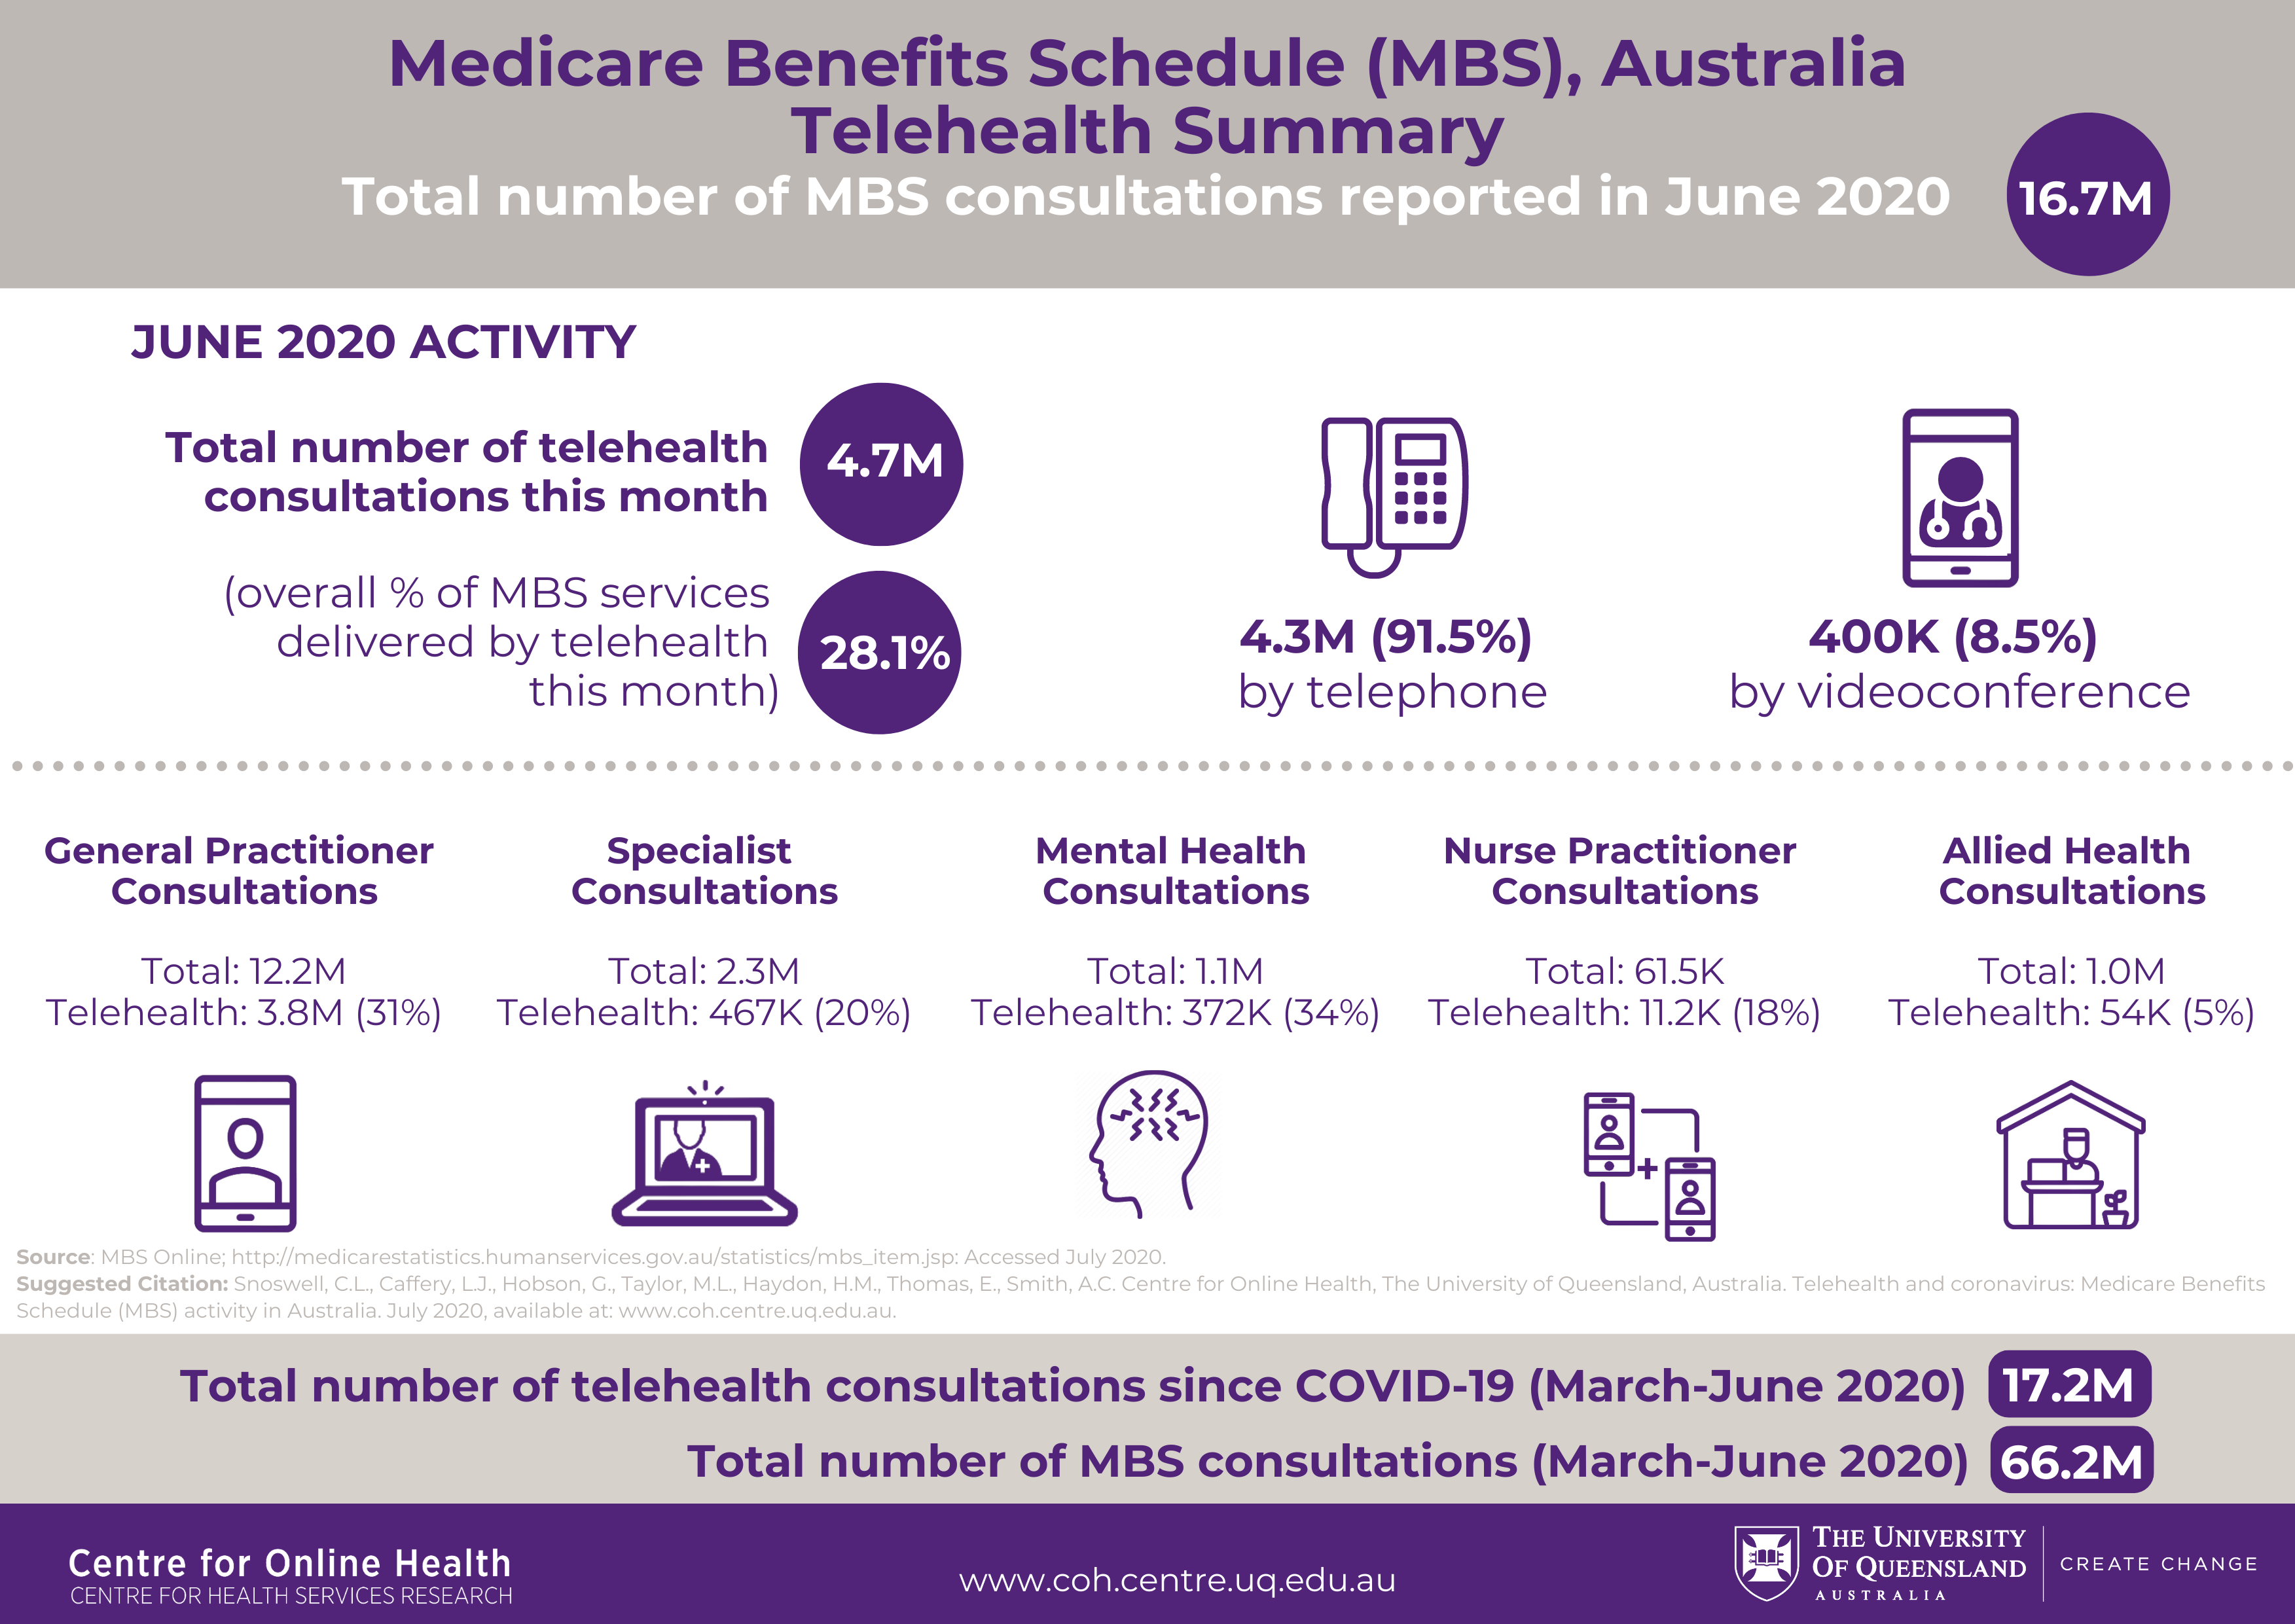 telehealth and coronavirus medicare benefits schedule mbs activity in australia centre for online health university of queensland